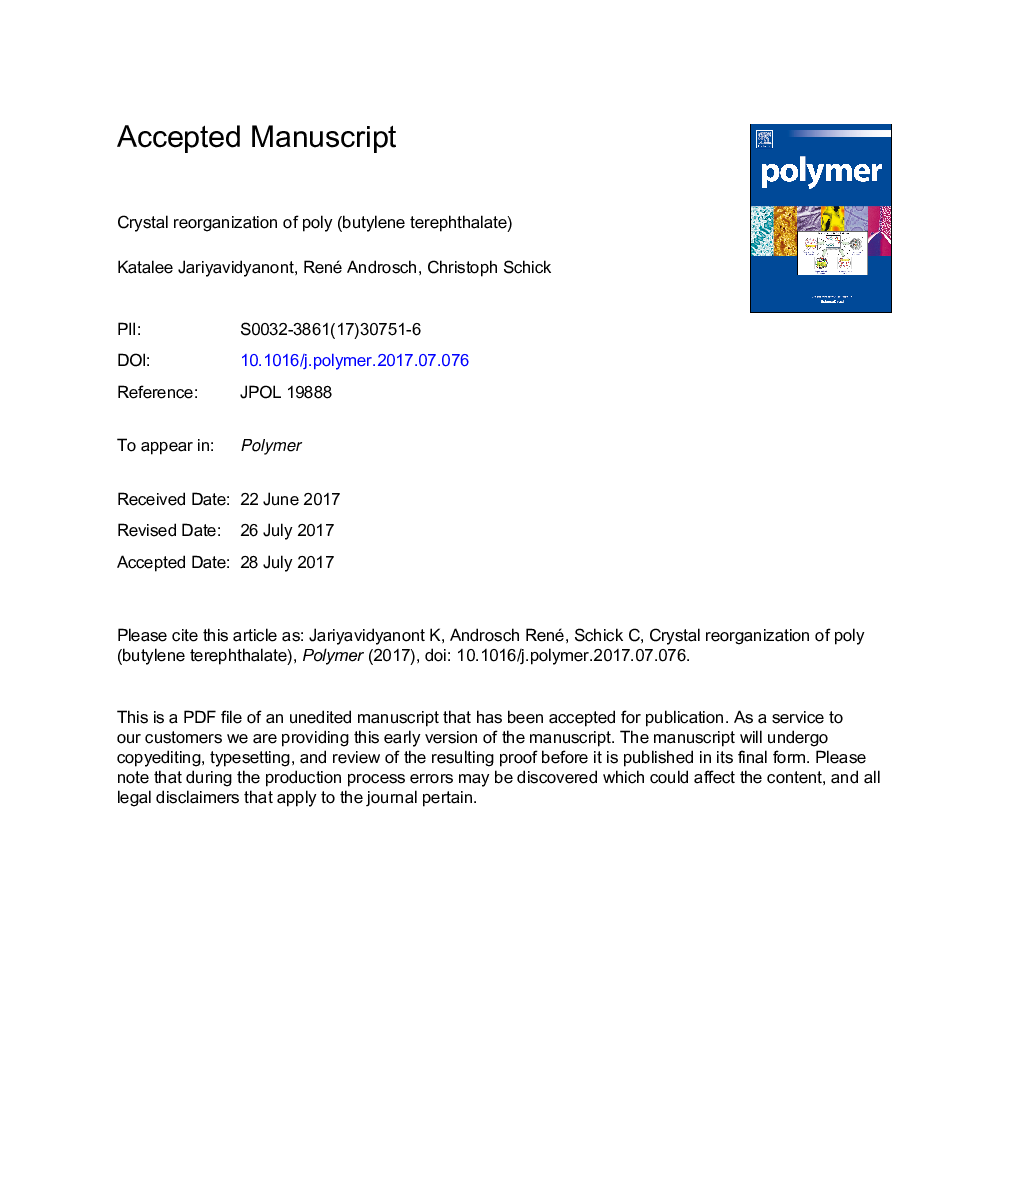 Crystal reorganization of poly (butylene terephthalate)